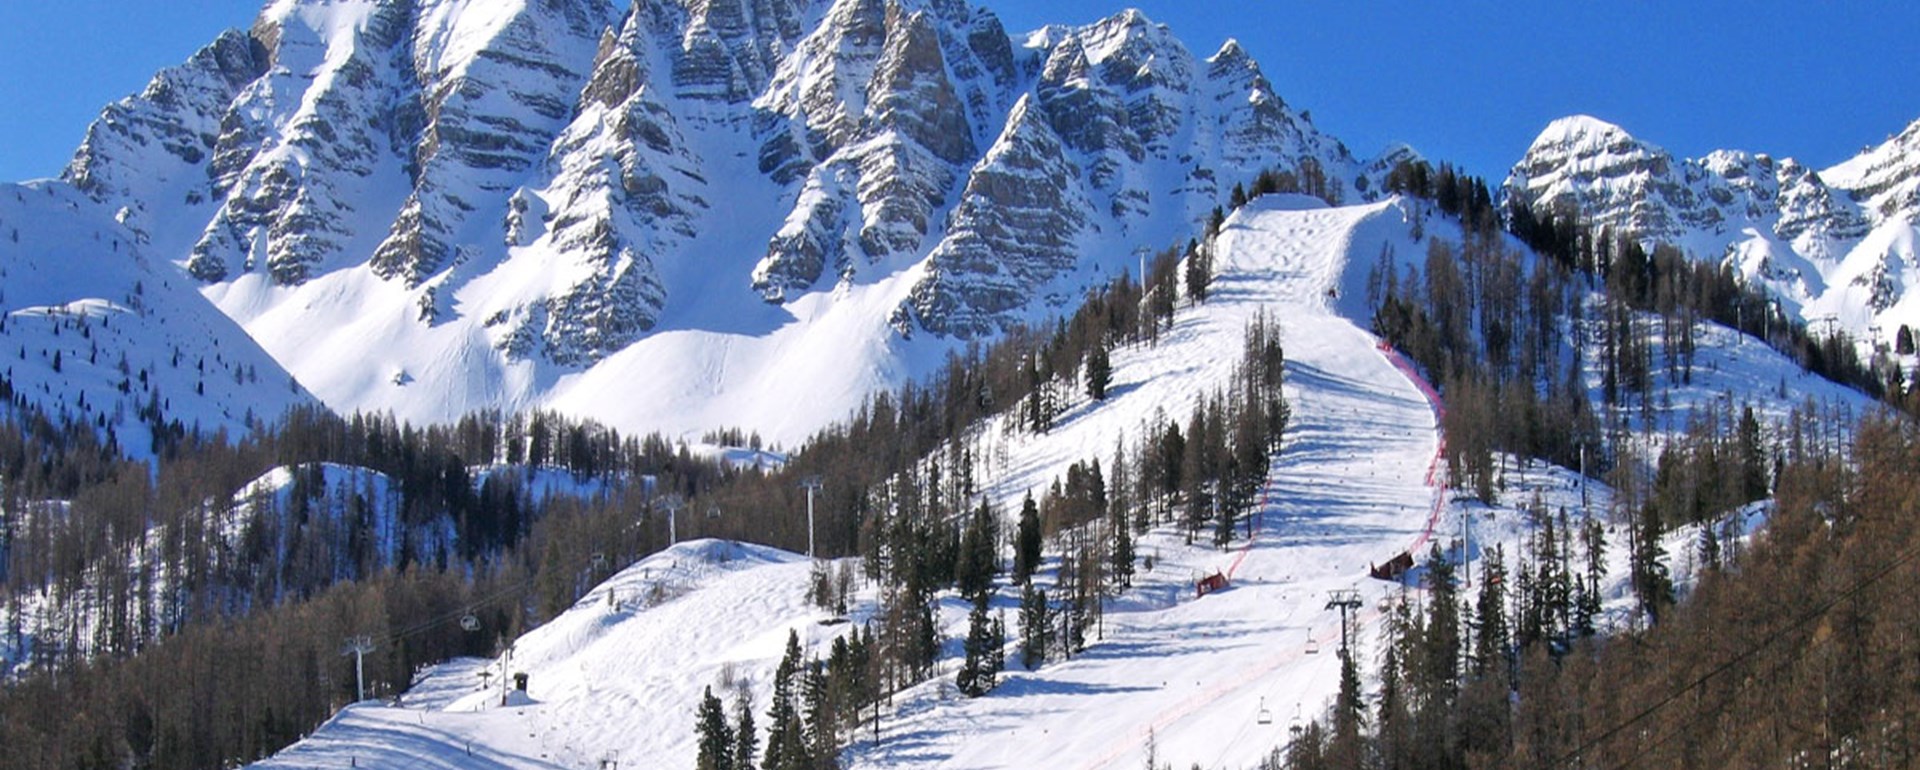 Ski Region - Southern Alps